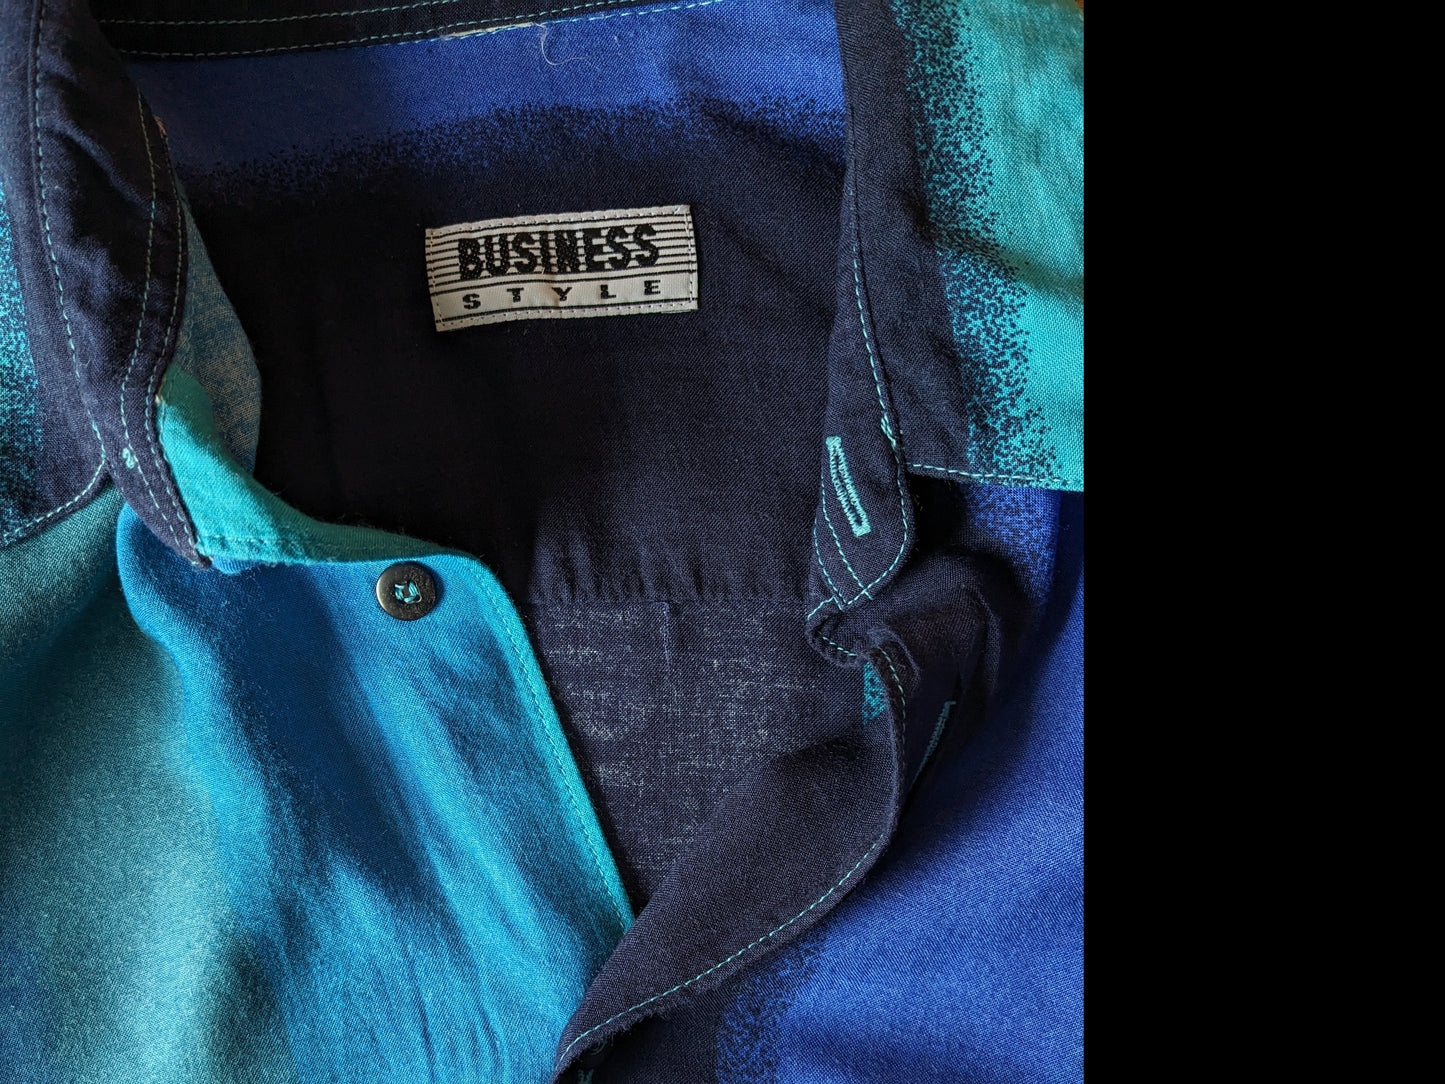 Vintage 80's-90's Business Style overhemd korte mouw. Blauwe print. Maat L.